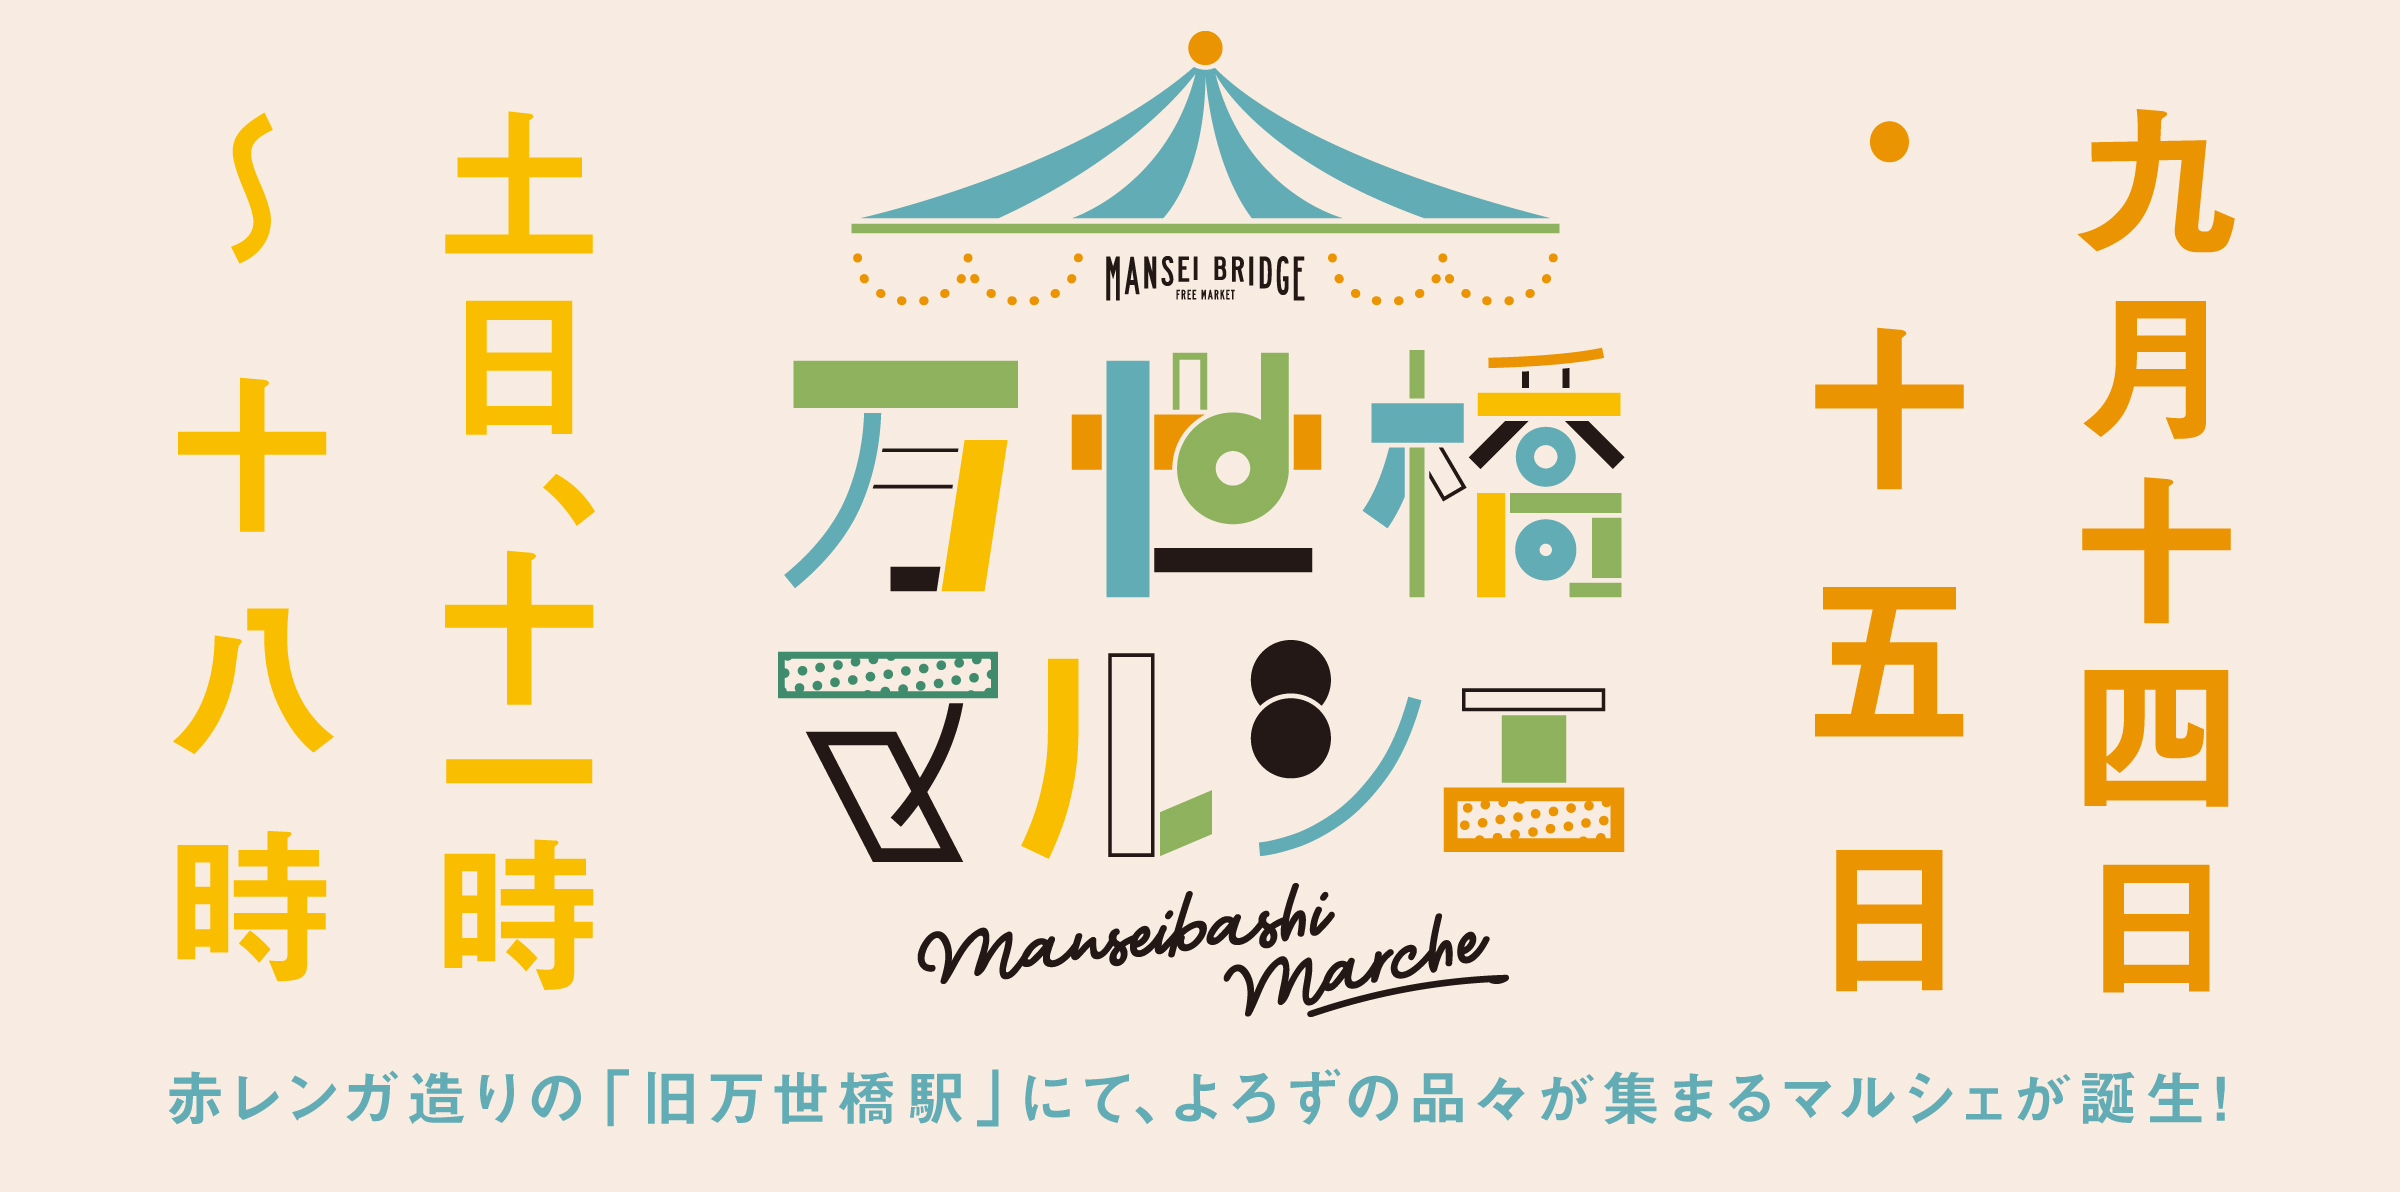 Manseibashi marche consumer hp 09